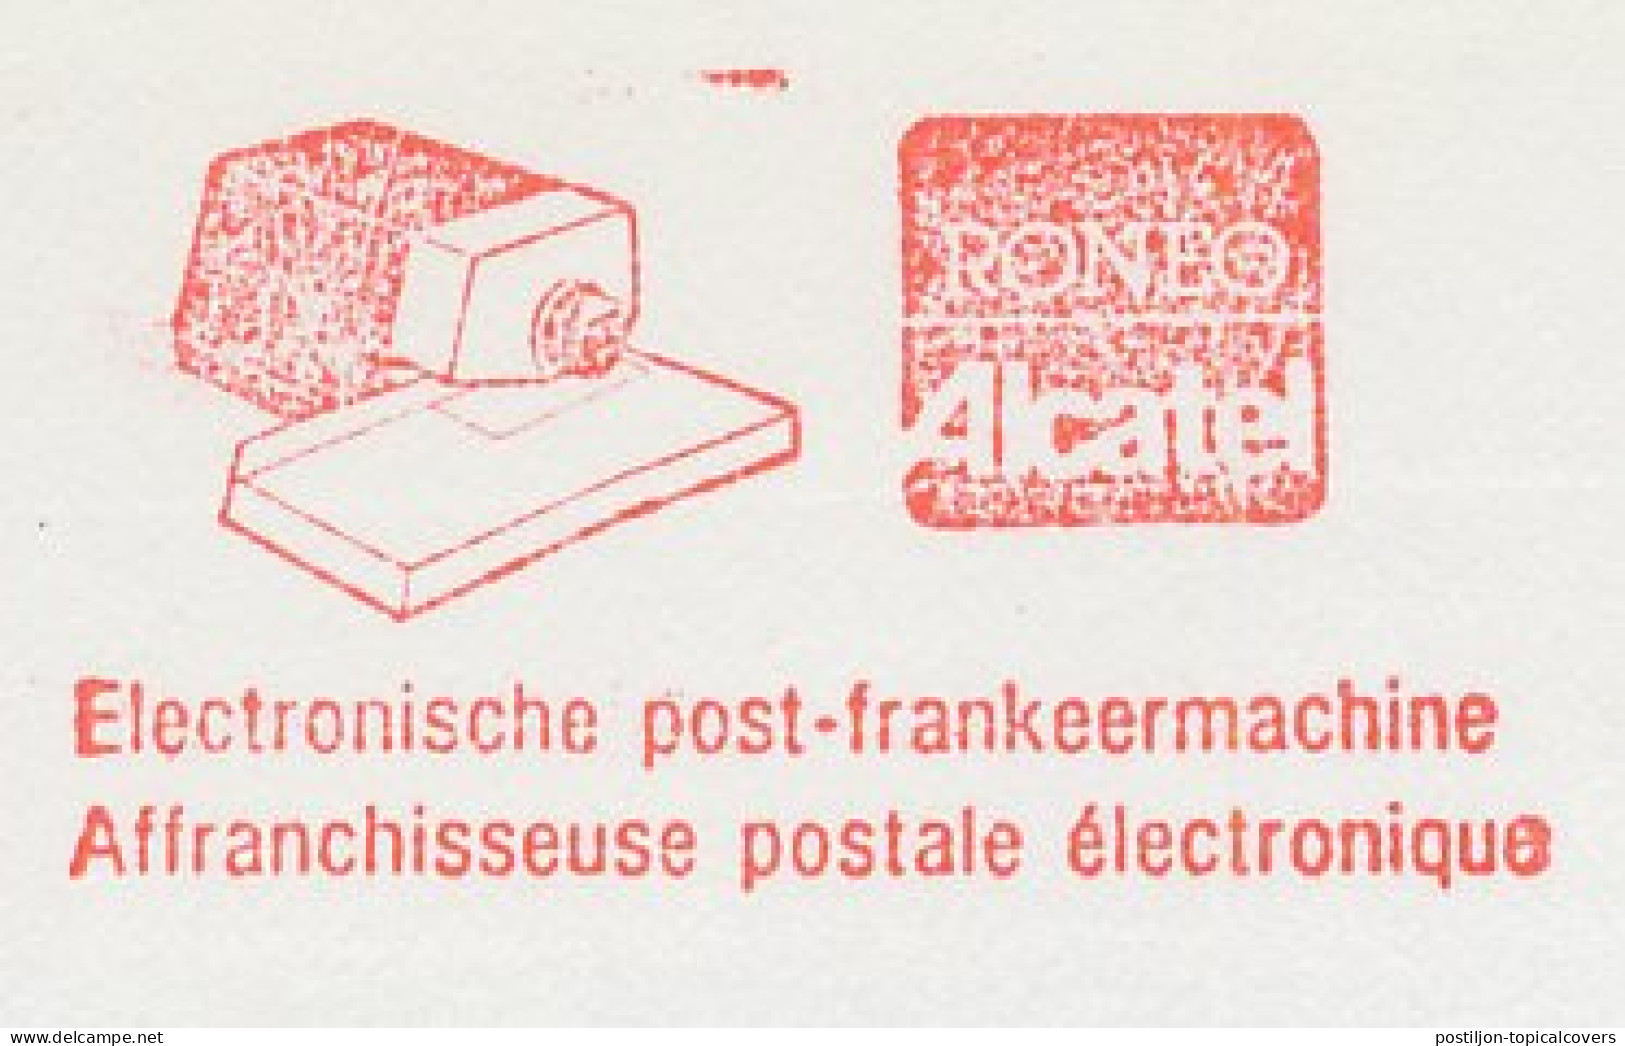 Meter Cut Belgium 1986 Roneo Alcatel - Automaatzegels [ATM]